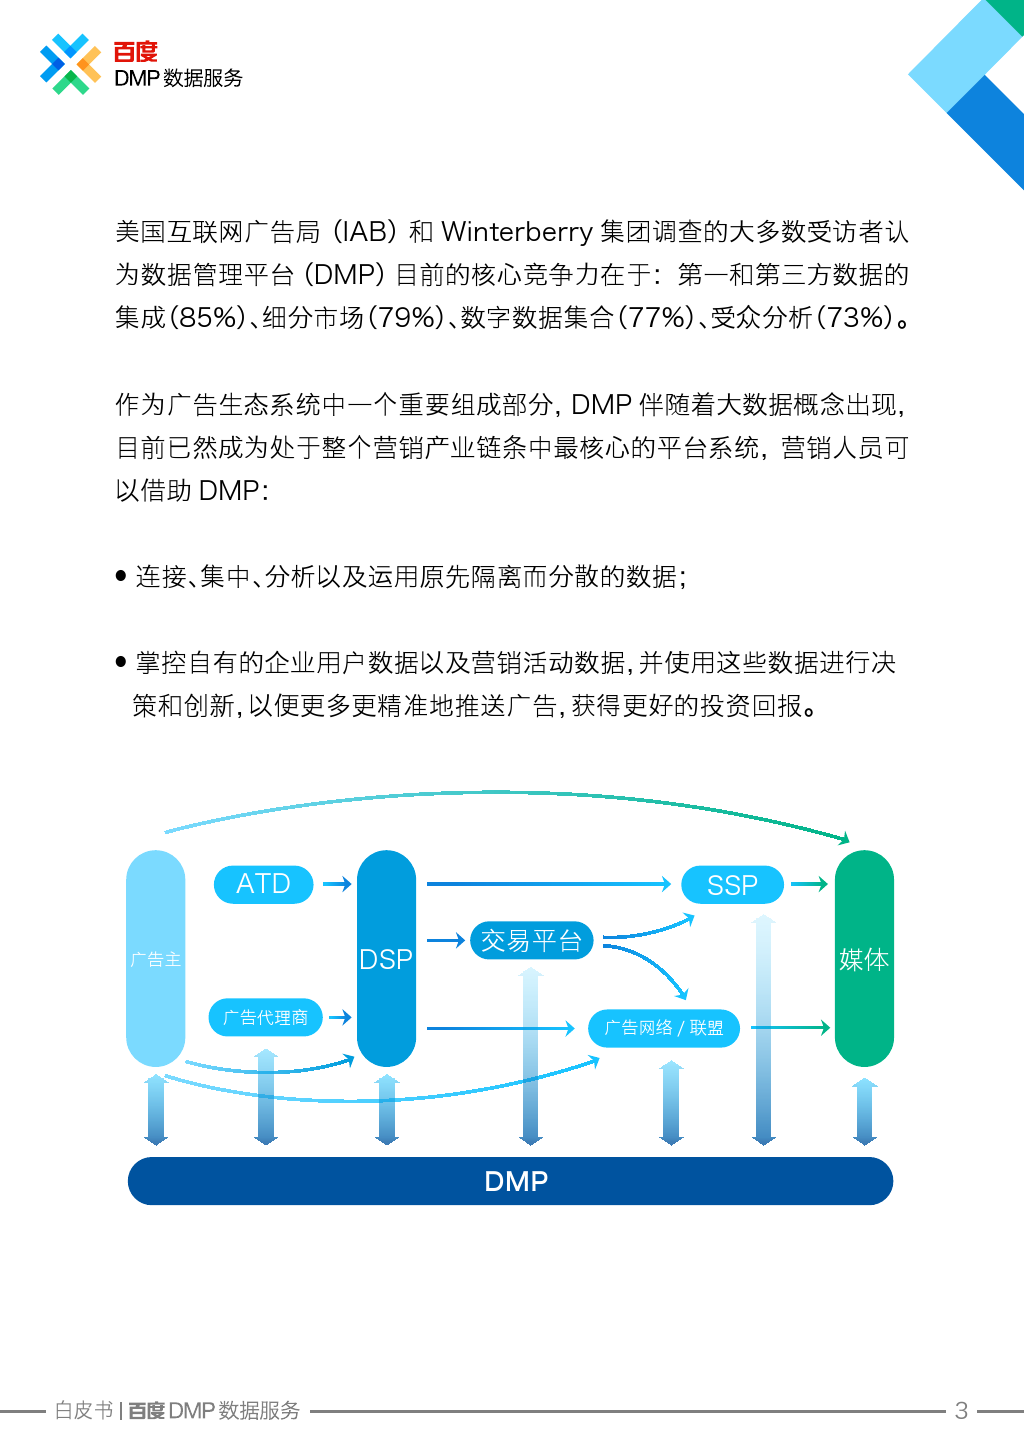 Baidu_DMP_WhitePaper_000004